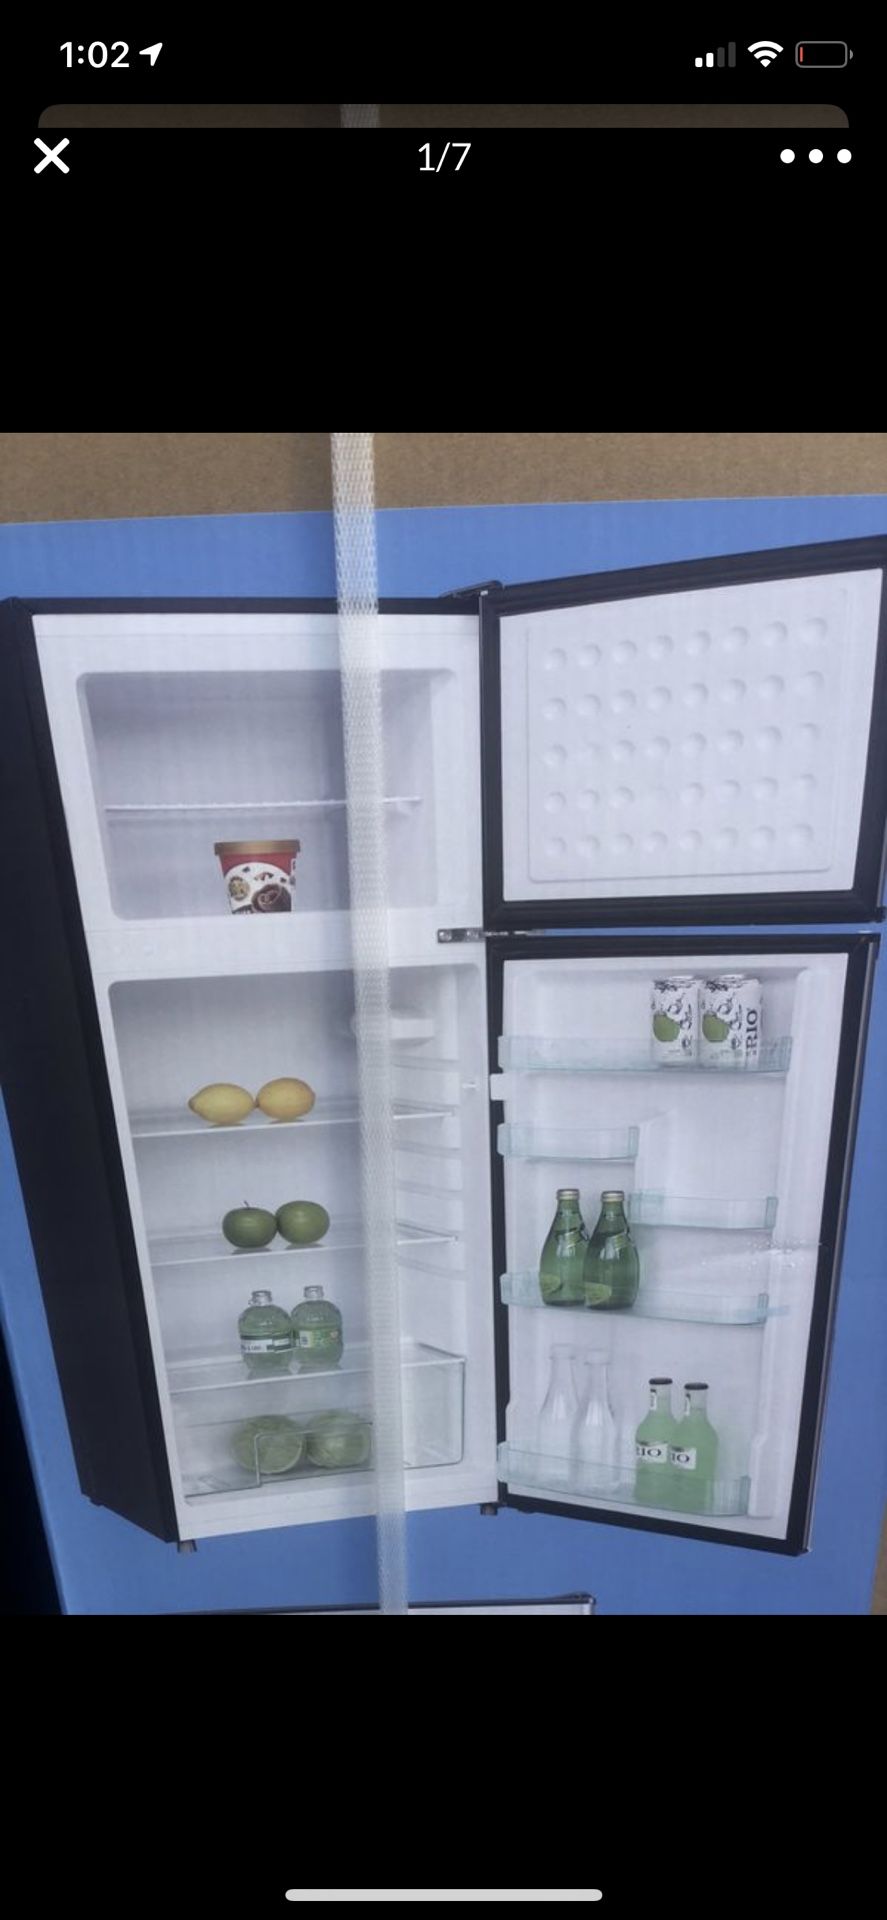 New refrigerator/freezer New in box New in box refrigerators / freezer Factory sealed new in box refrigerator/freezer 7.5 cu. ft. Top-Freezer Refrige